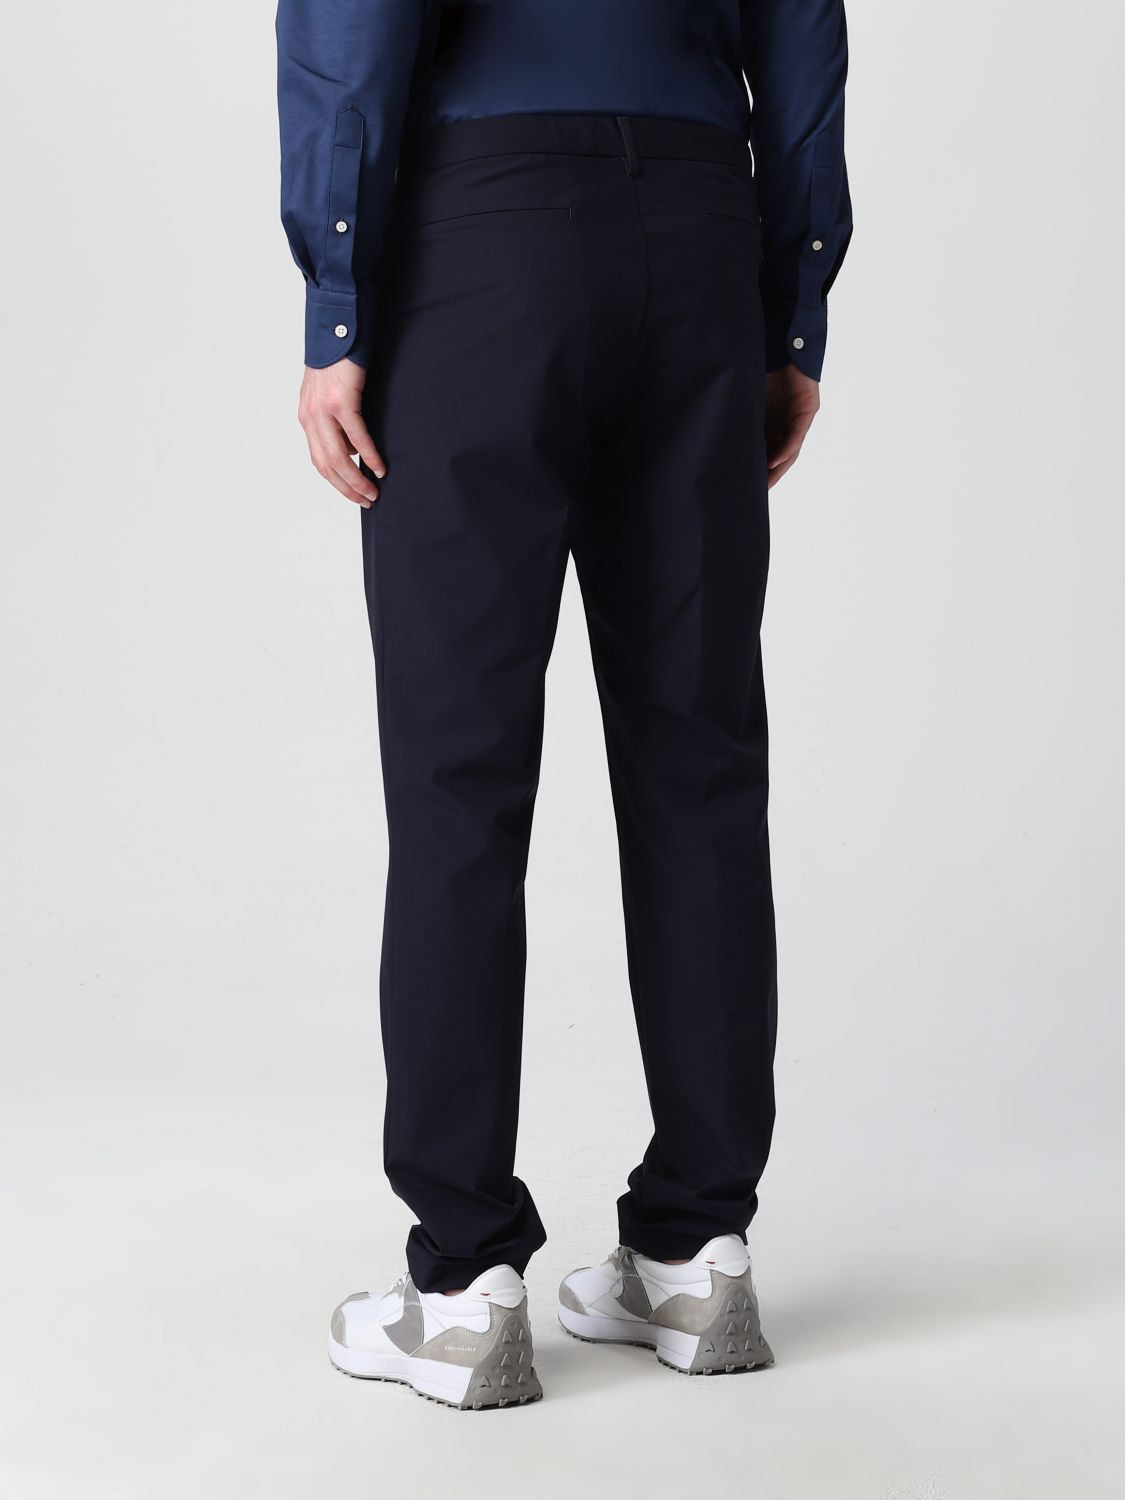 BOGGI MILANO: pants in BTech stretch nylon | Pants Boggi Milano Men ...